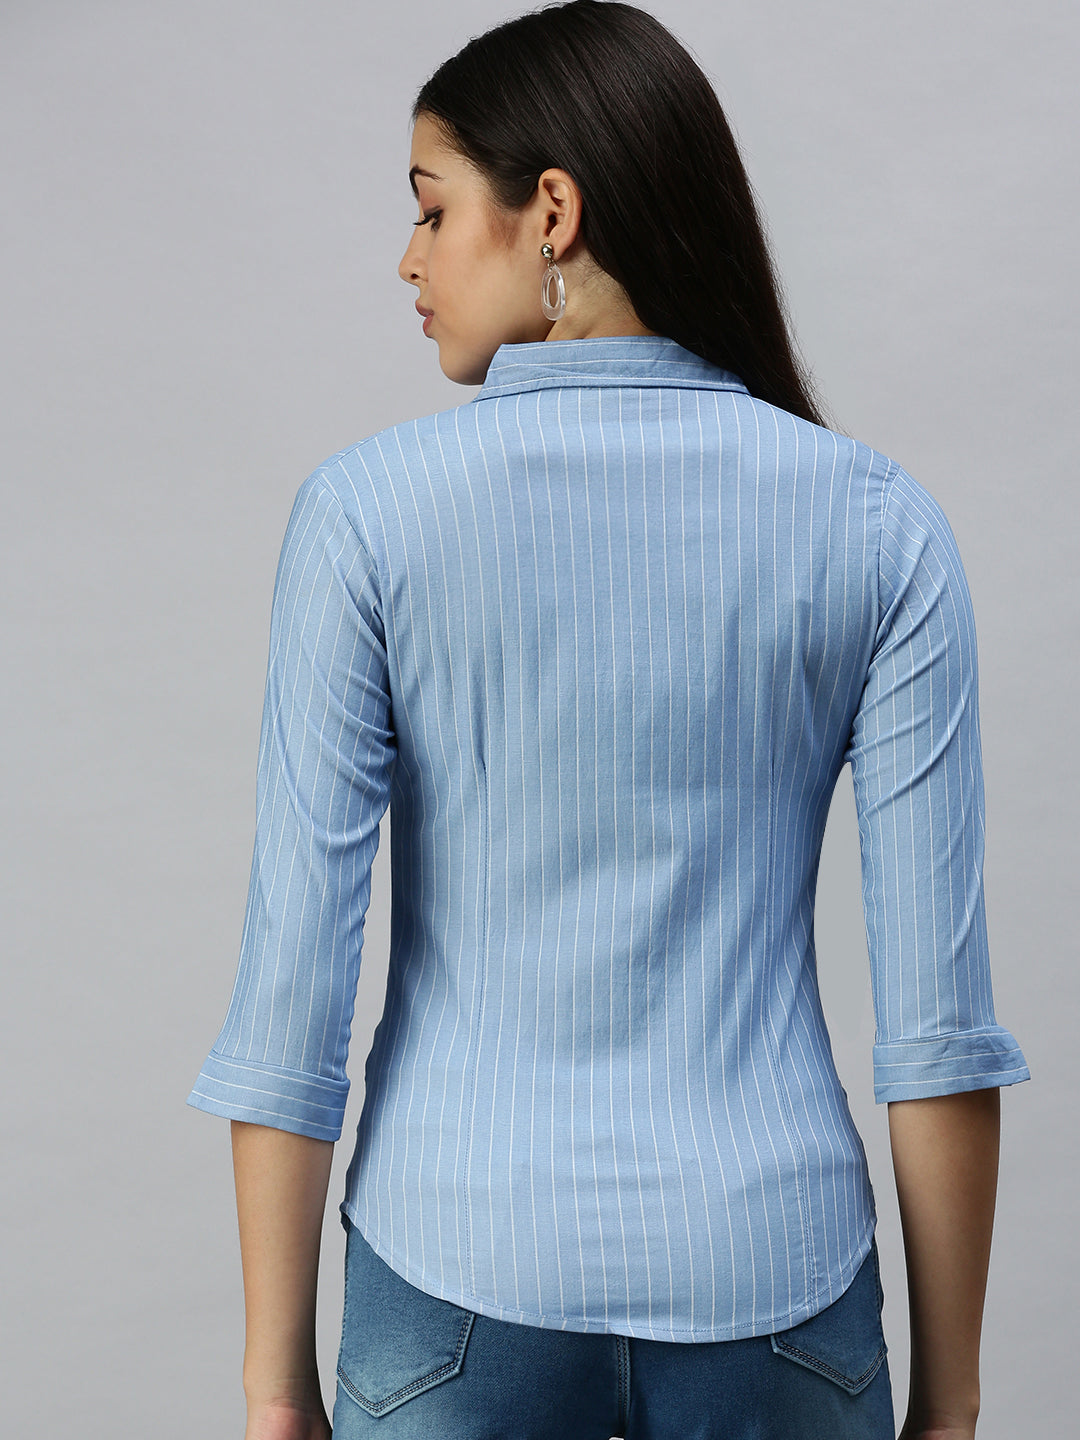 Women's Blue Printed Shirt